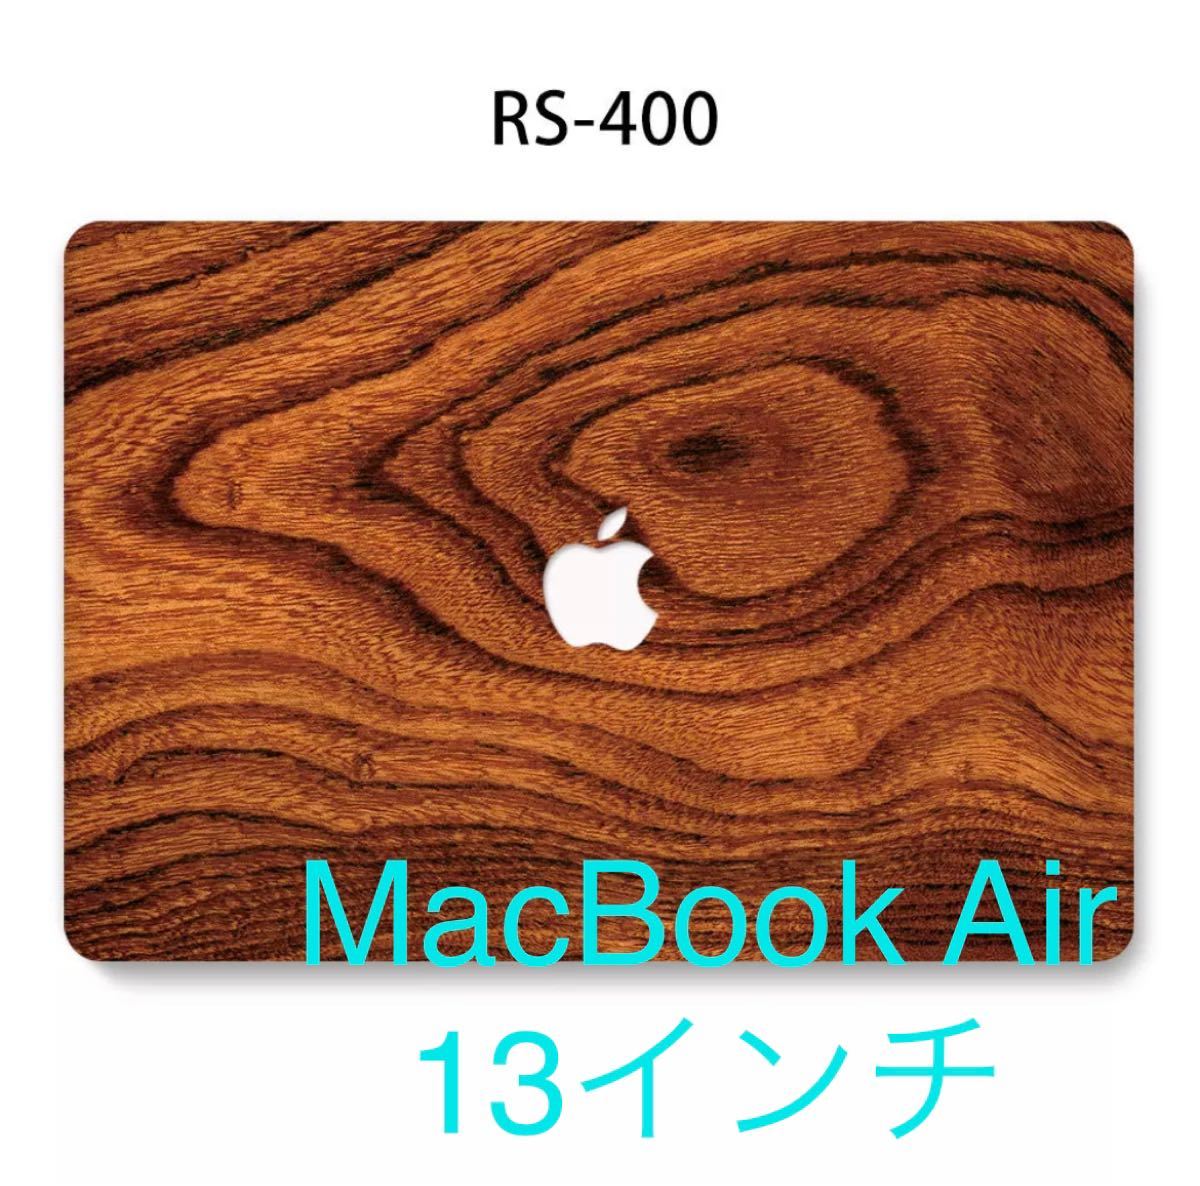 MacBook Air 13インチ カバー ケース 木目調 おしゃれ 高級